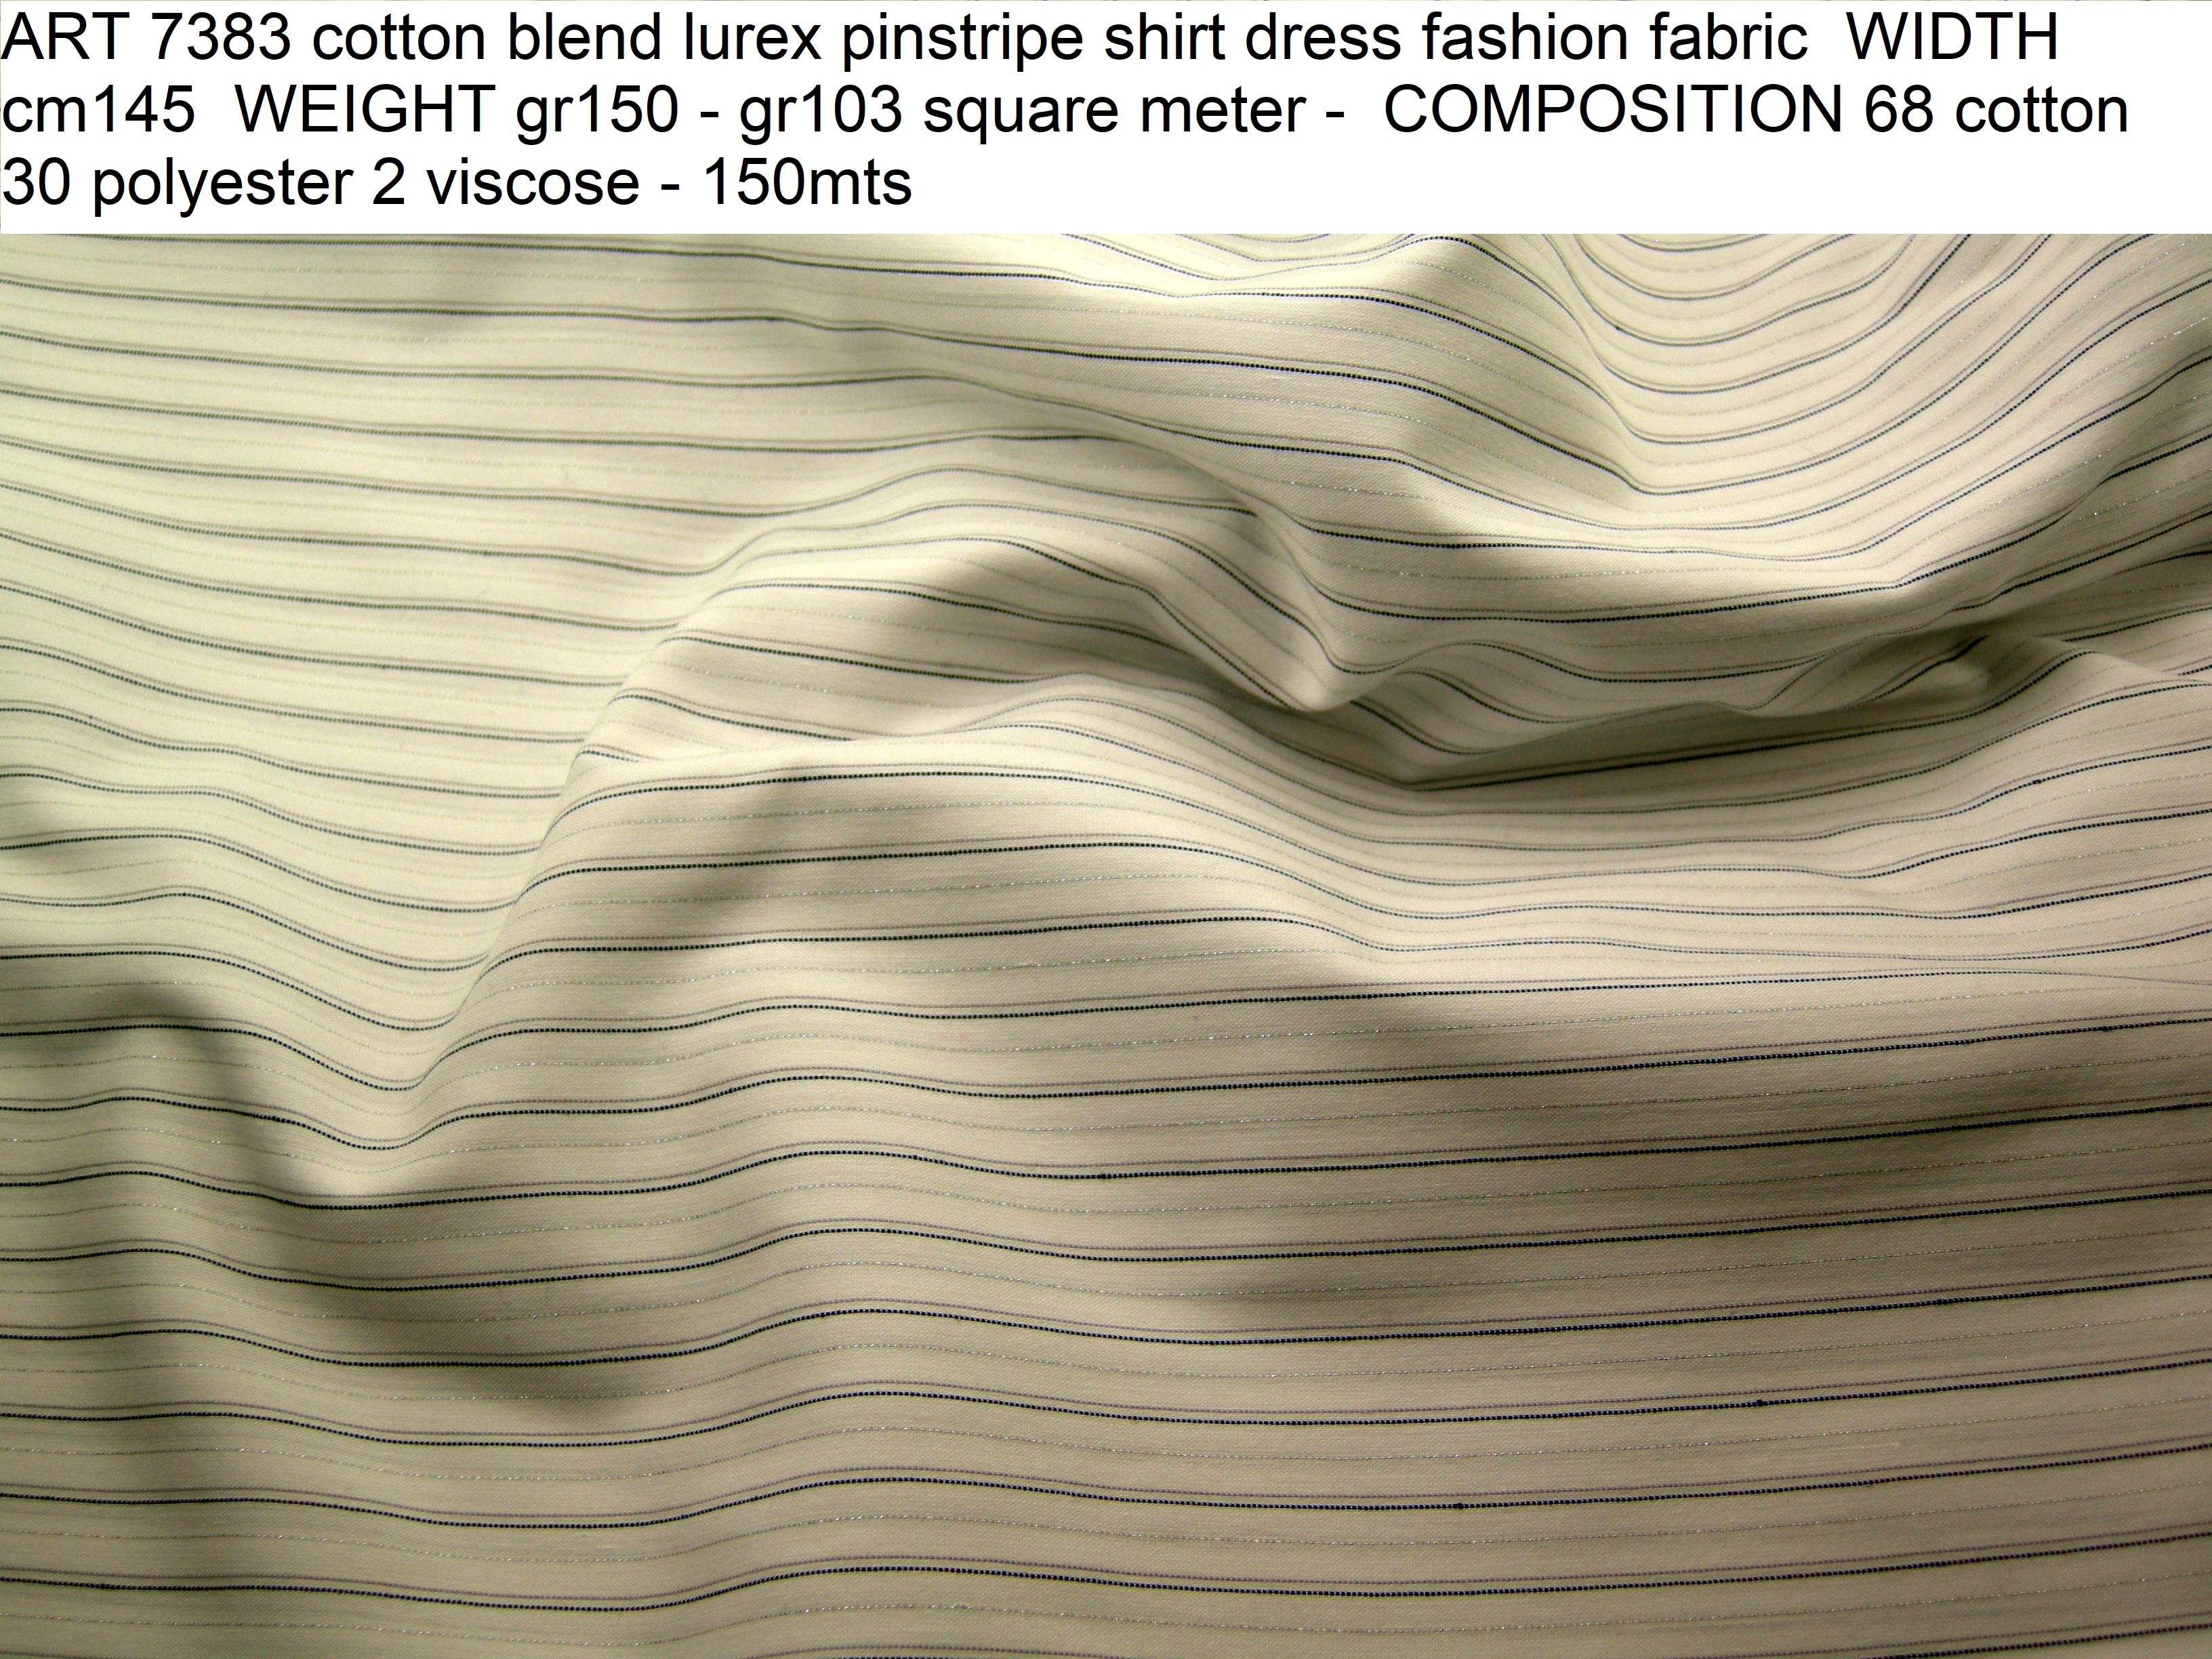 ART 7383 cotton blend lurex pinstripe shirt dress fashion fabric WIDTH cm145 WEIGHT gr150 - gr103 square meter - COMPOSITION 68 cotton 30 polyester 2 viscose - 150mts